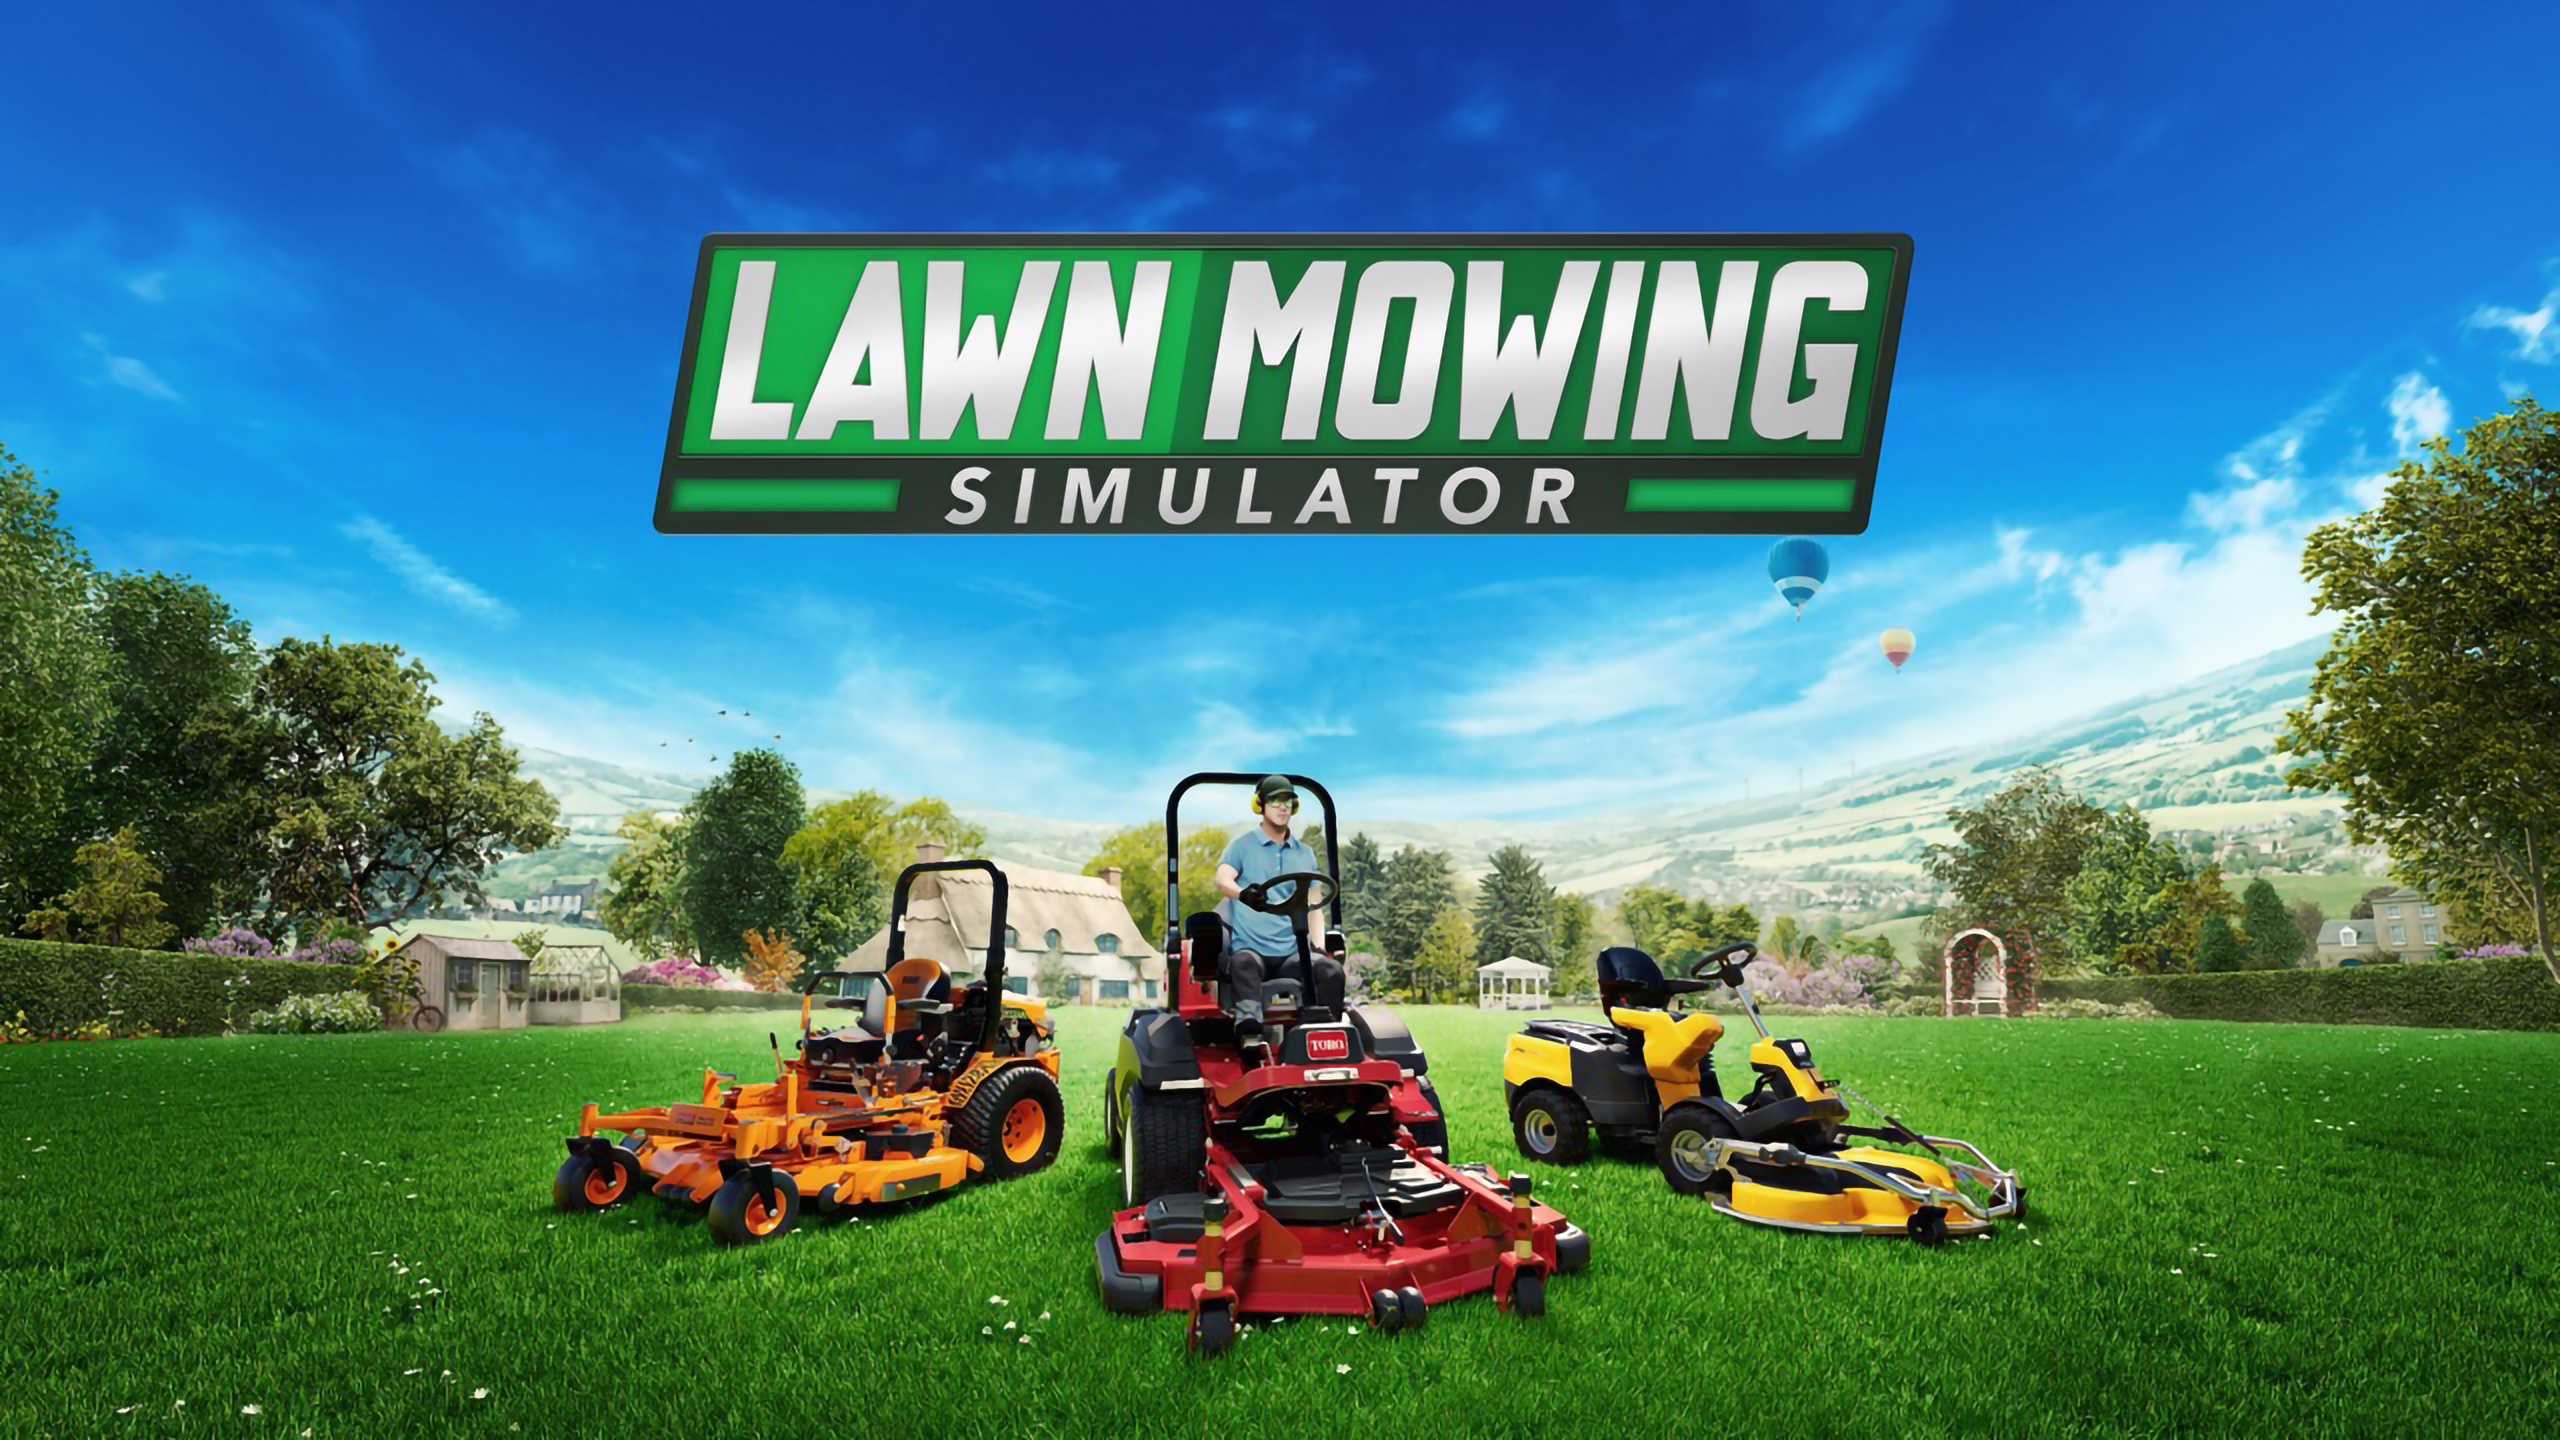 Lawn Mowing Simulator Mobile Game Full Version Download